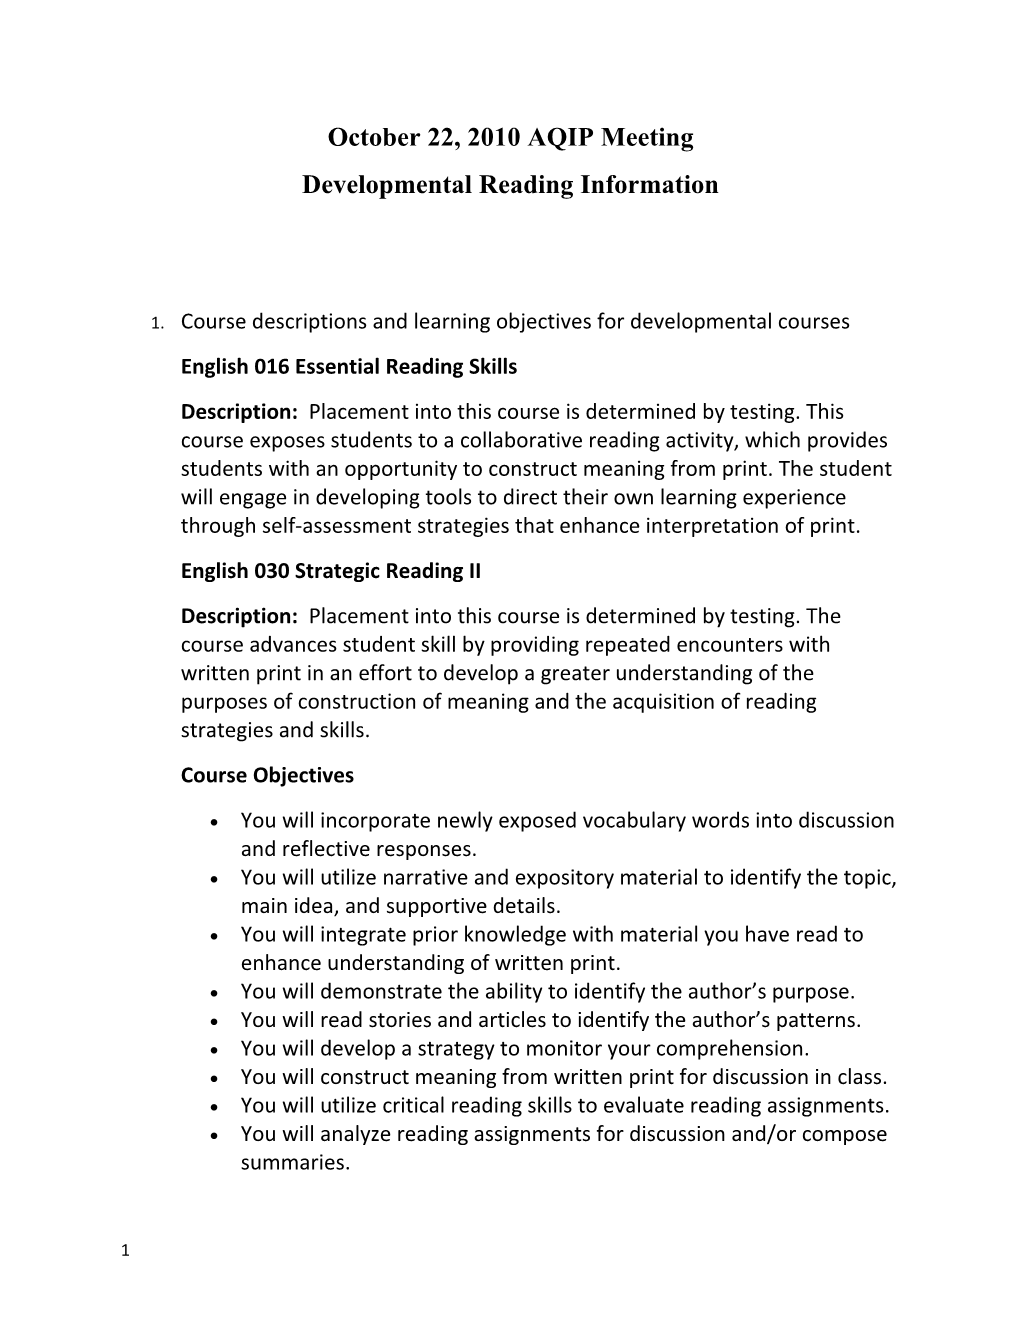 Developmental Reading Information